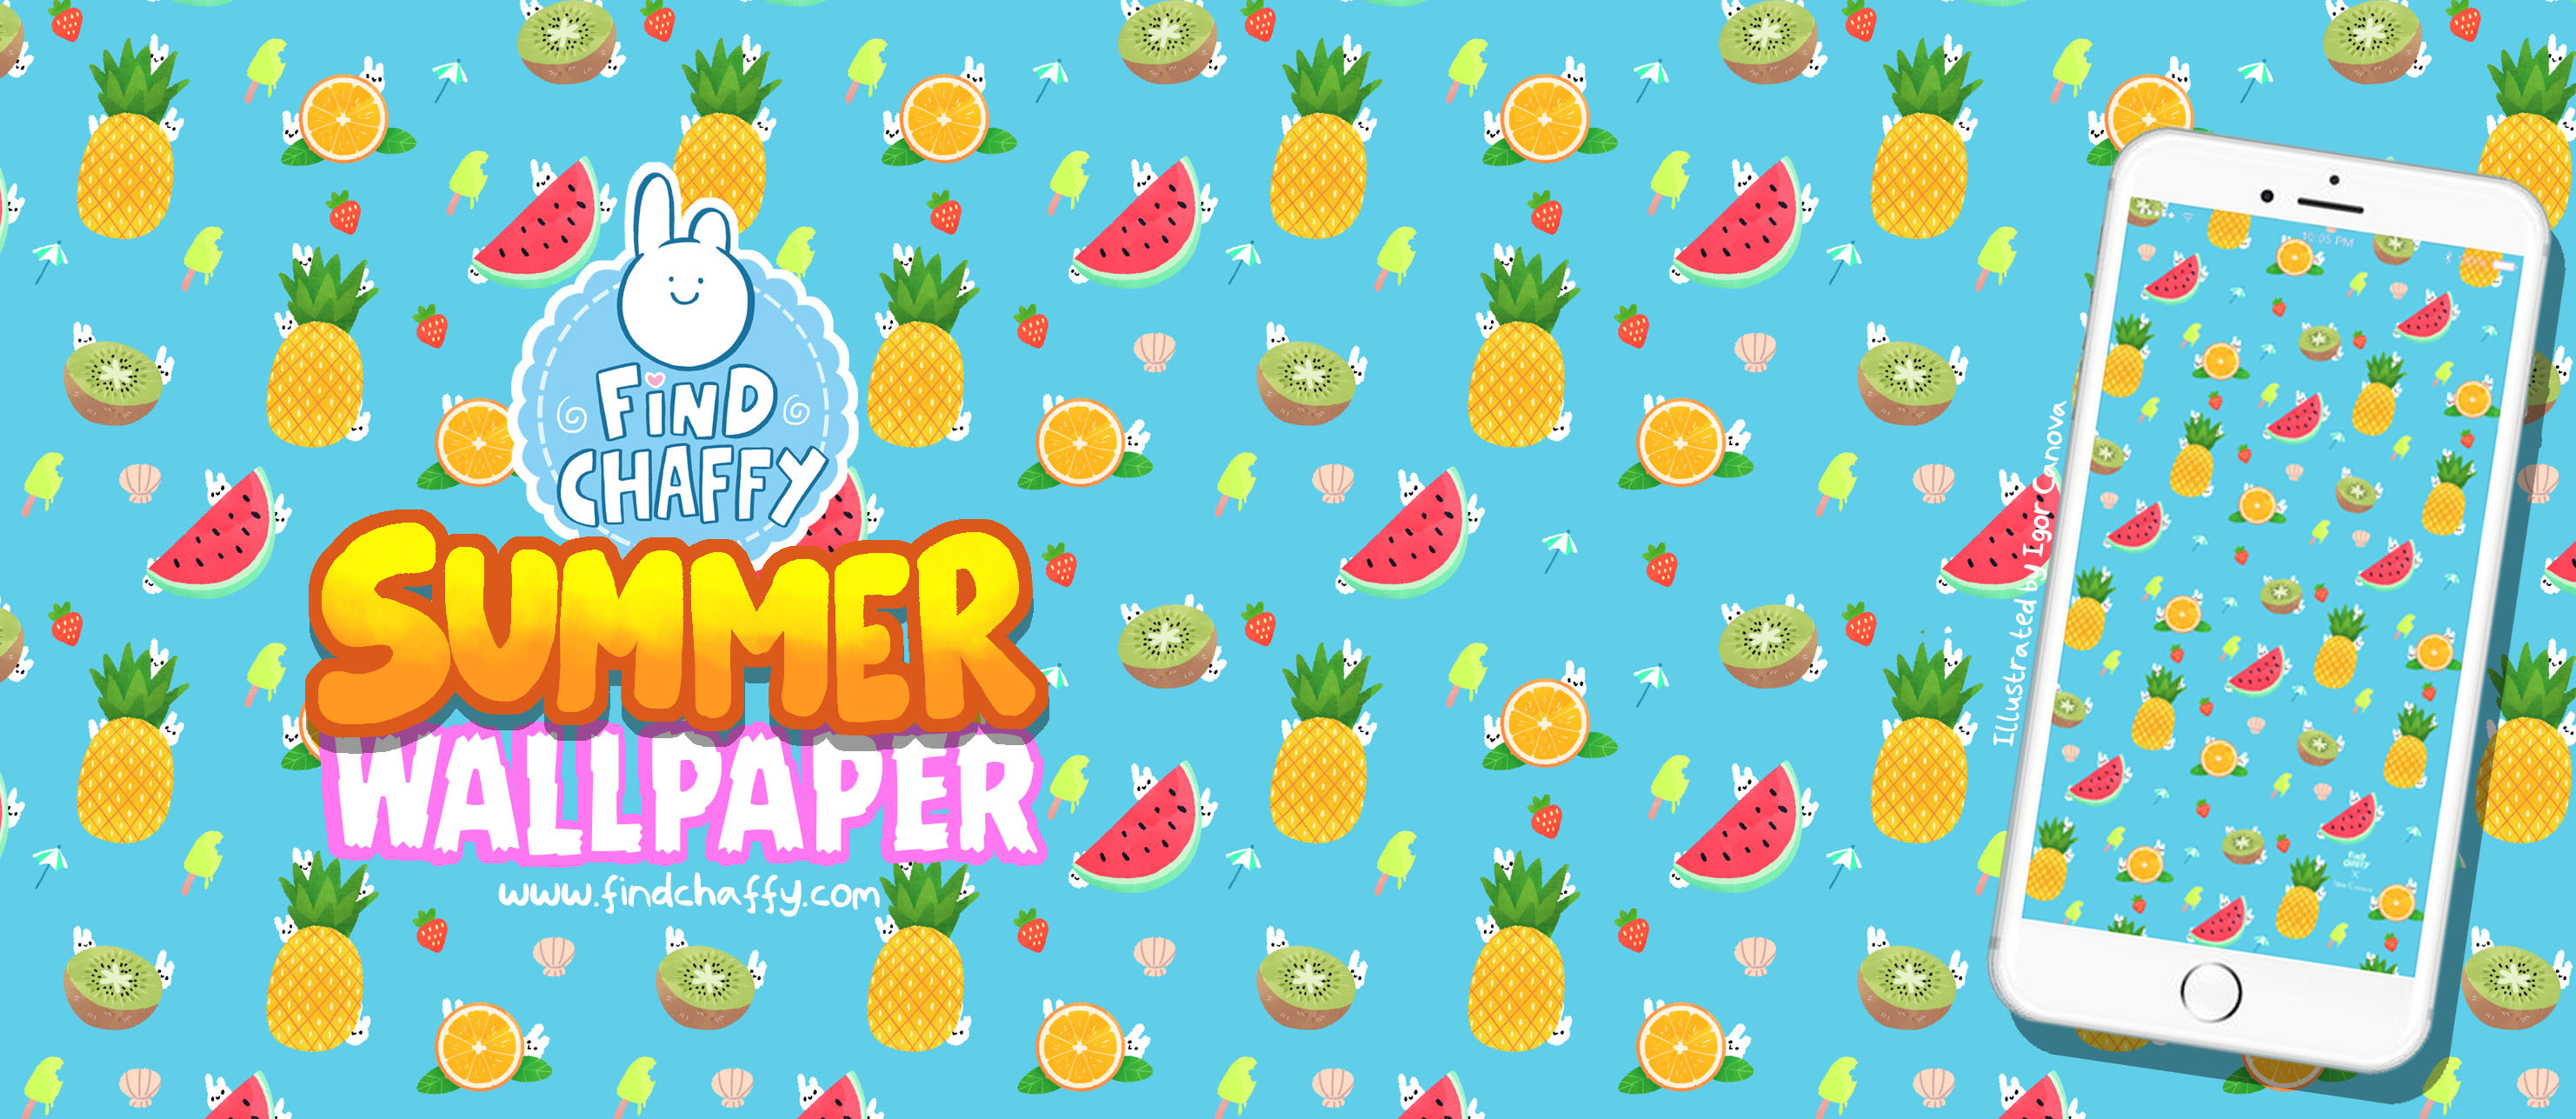 Find Chaffy – Summer wallpaper!